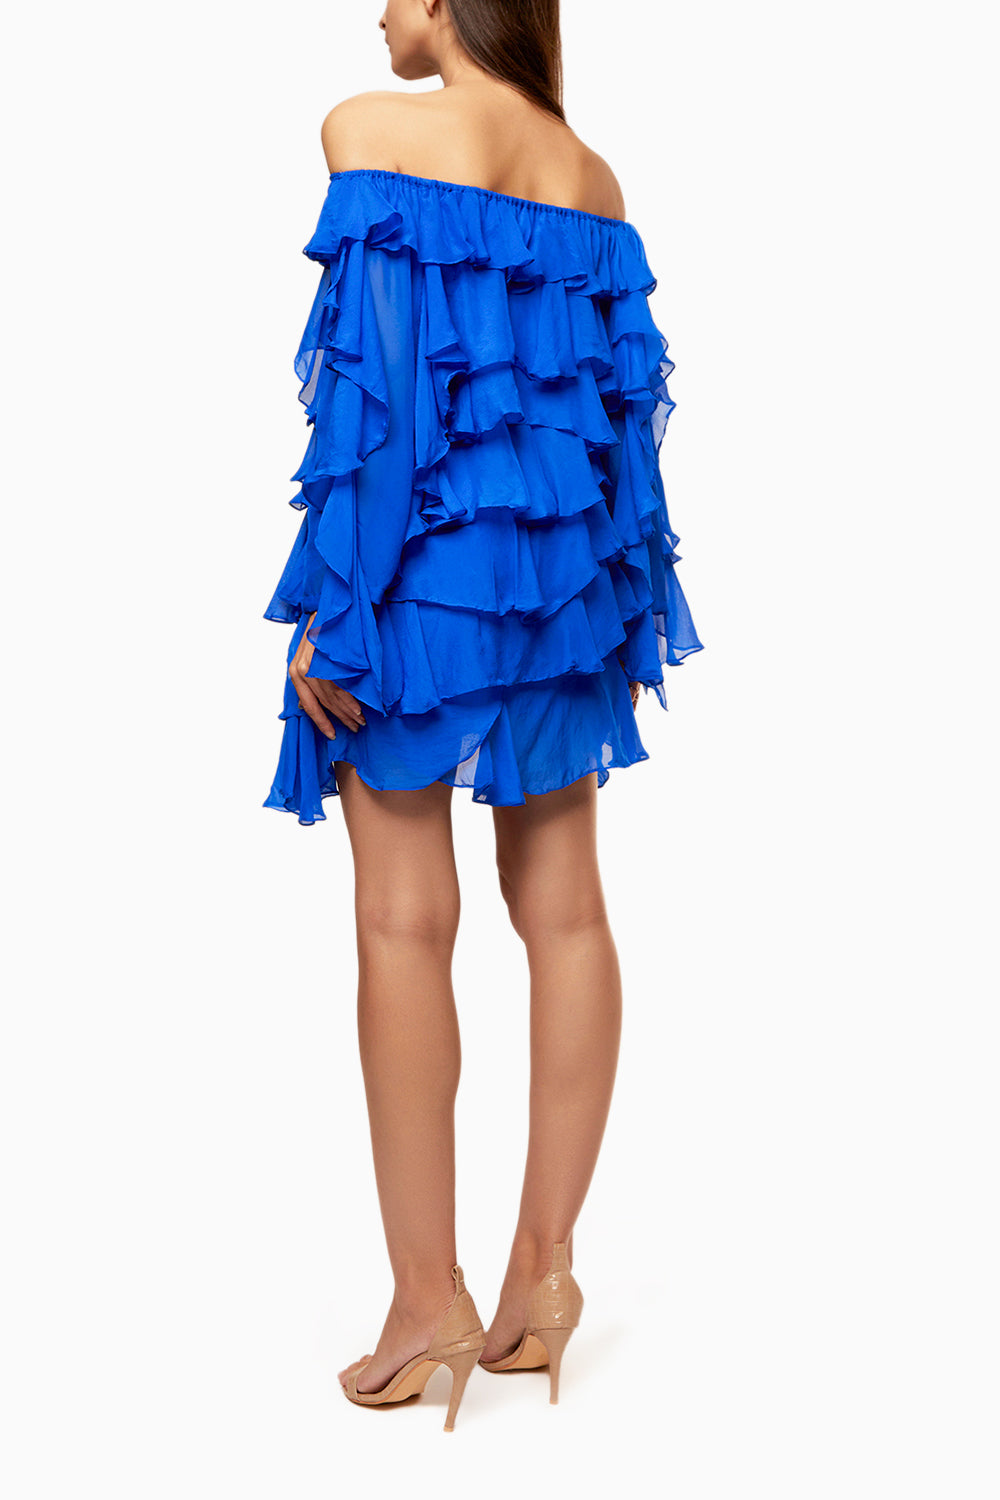 Marion Blue Chiffon Dress With Ruffle Detailing